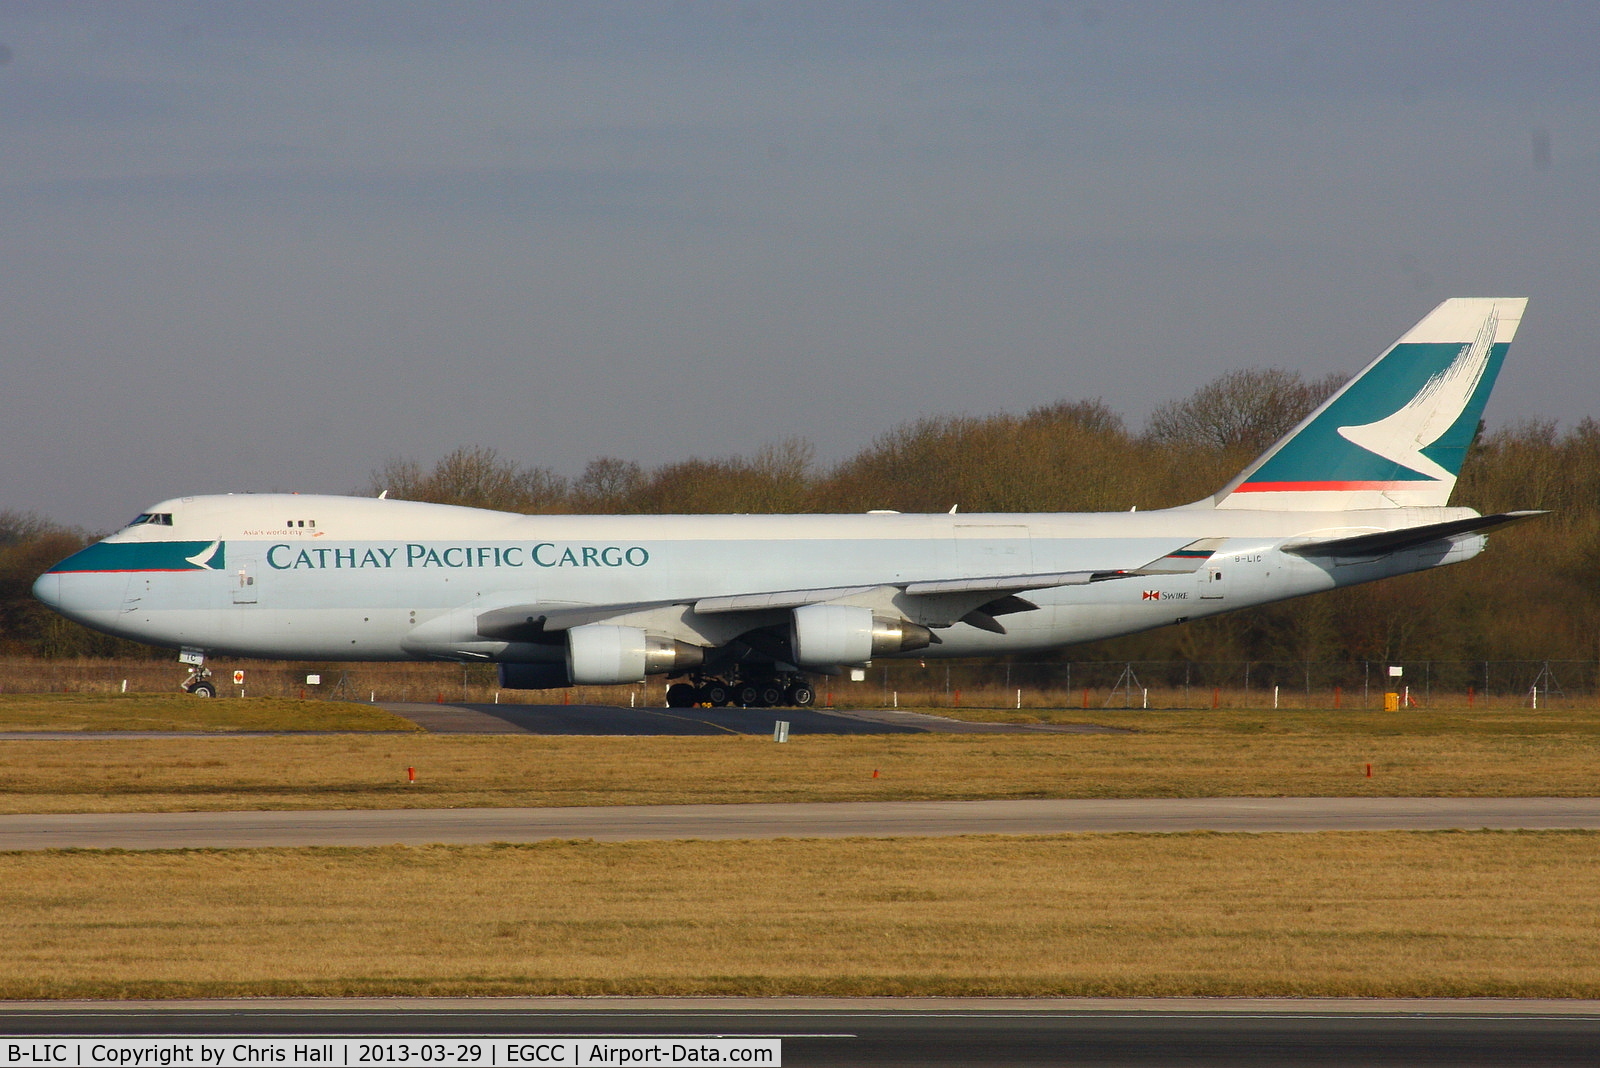 B-LIC, 2009 Boeing 747-467ERF C/N 36868, Cathay Pacific Cargo